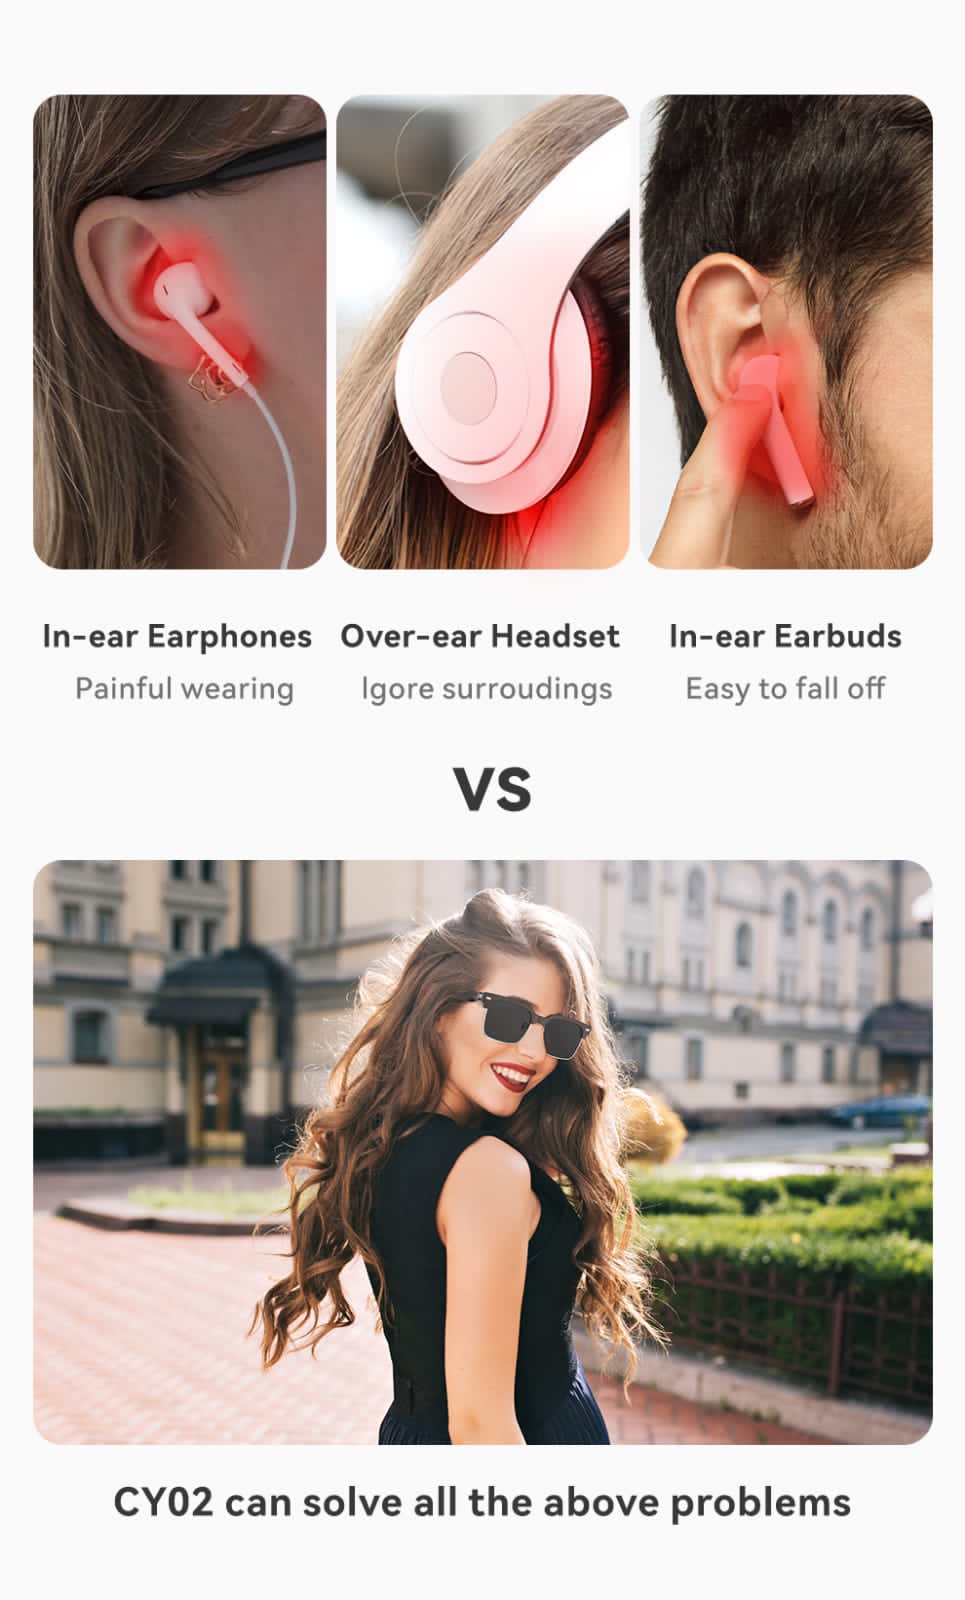 eEAR-BT系统：蓝牙助听器和视觉最全面的BT解决方案